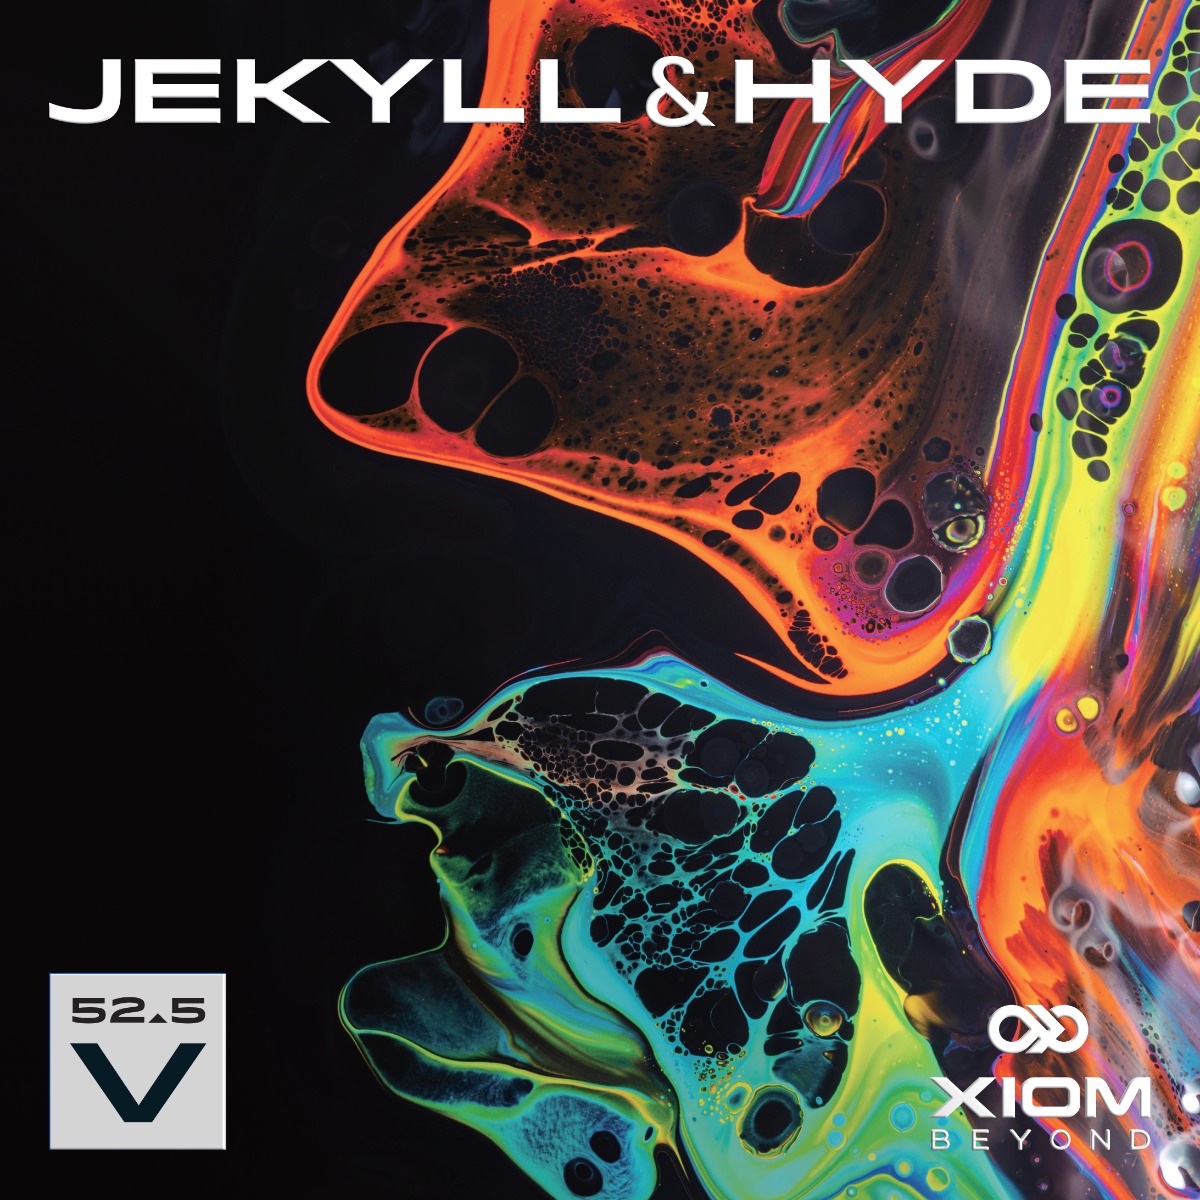 XIOM Jekyll & Hyde V 52.5